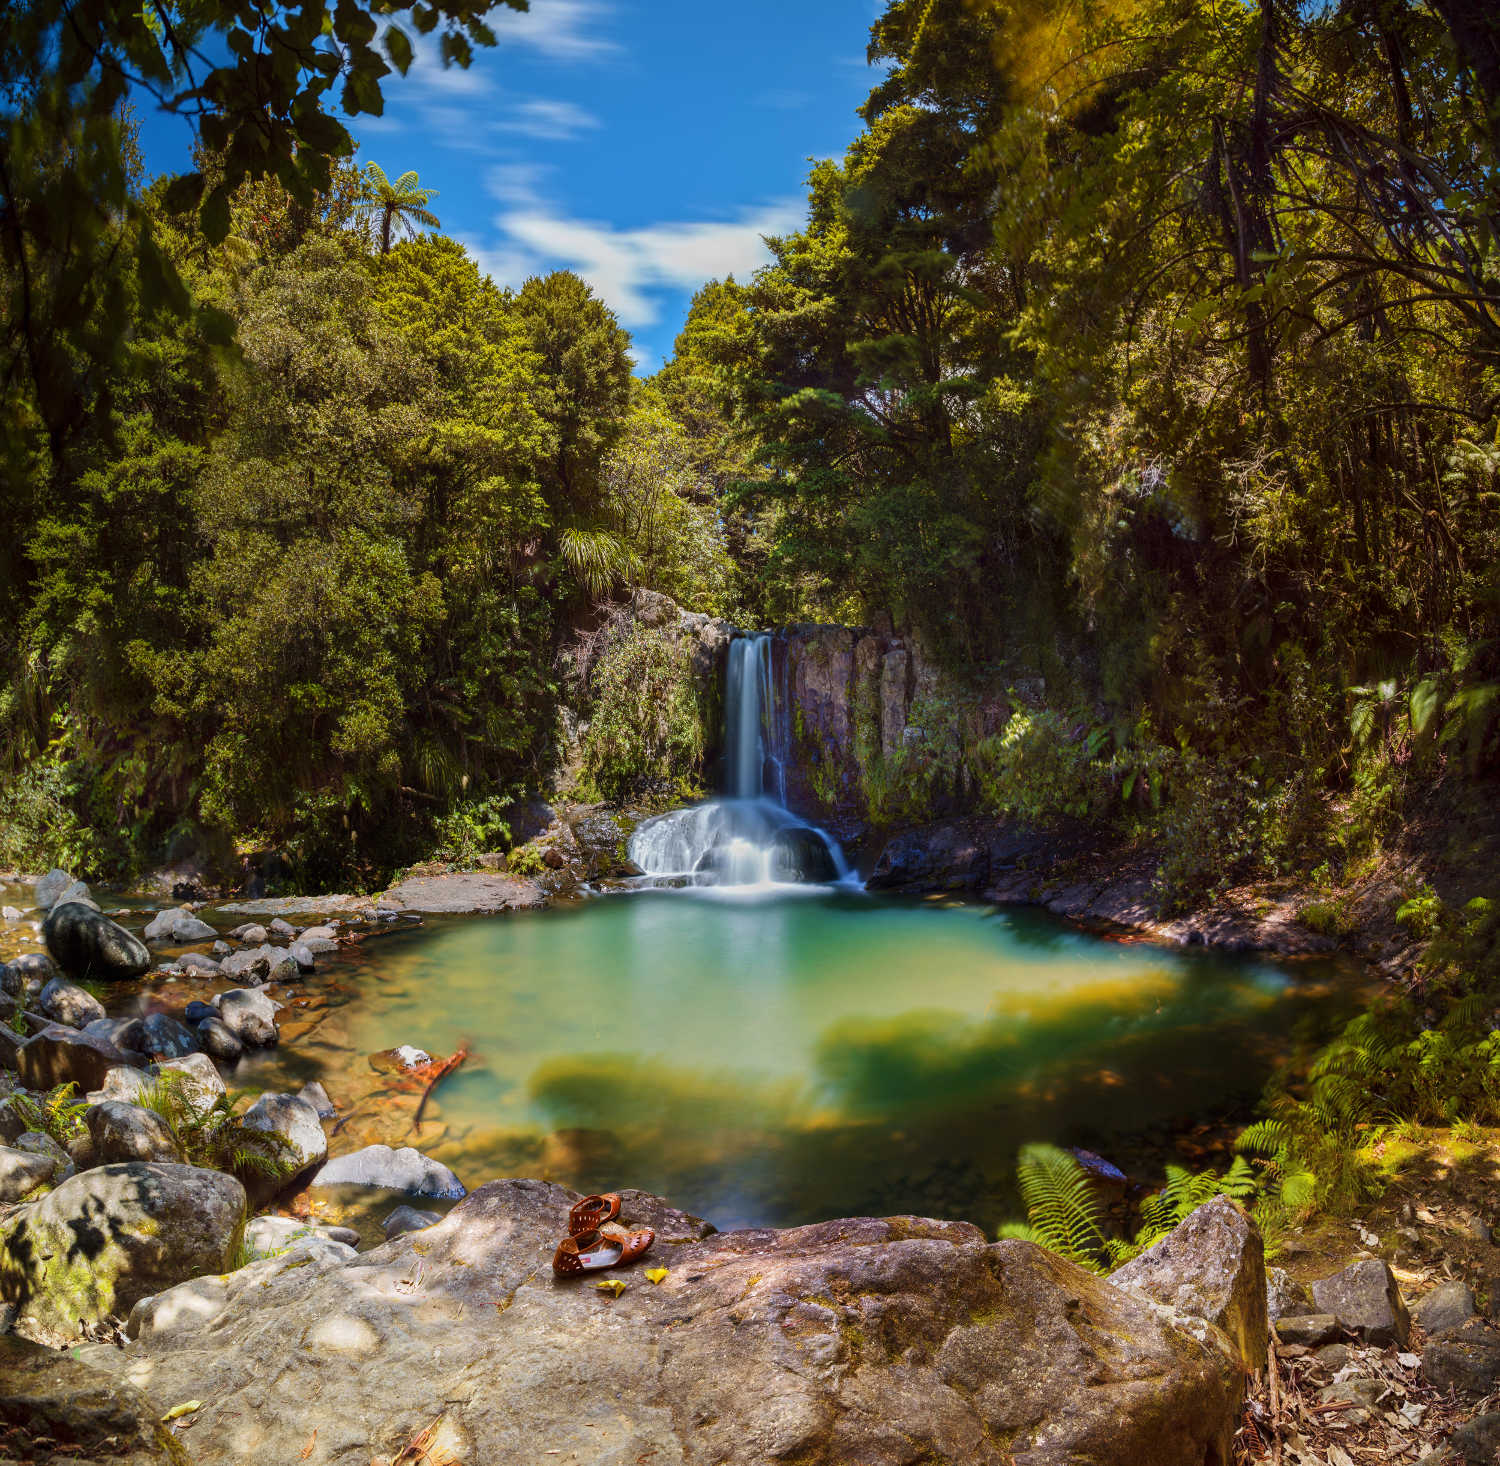 Waiau Falls in the Coromandel Peninsula, New Zealand